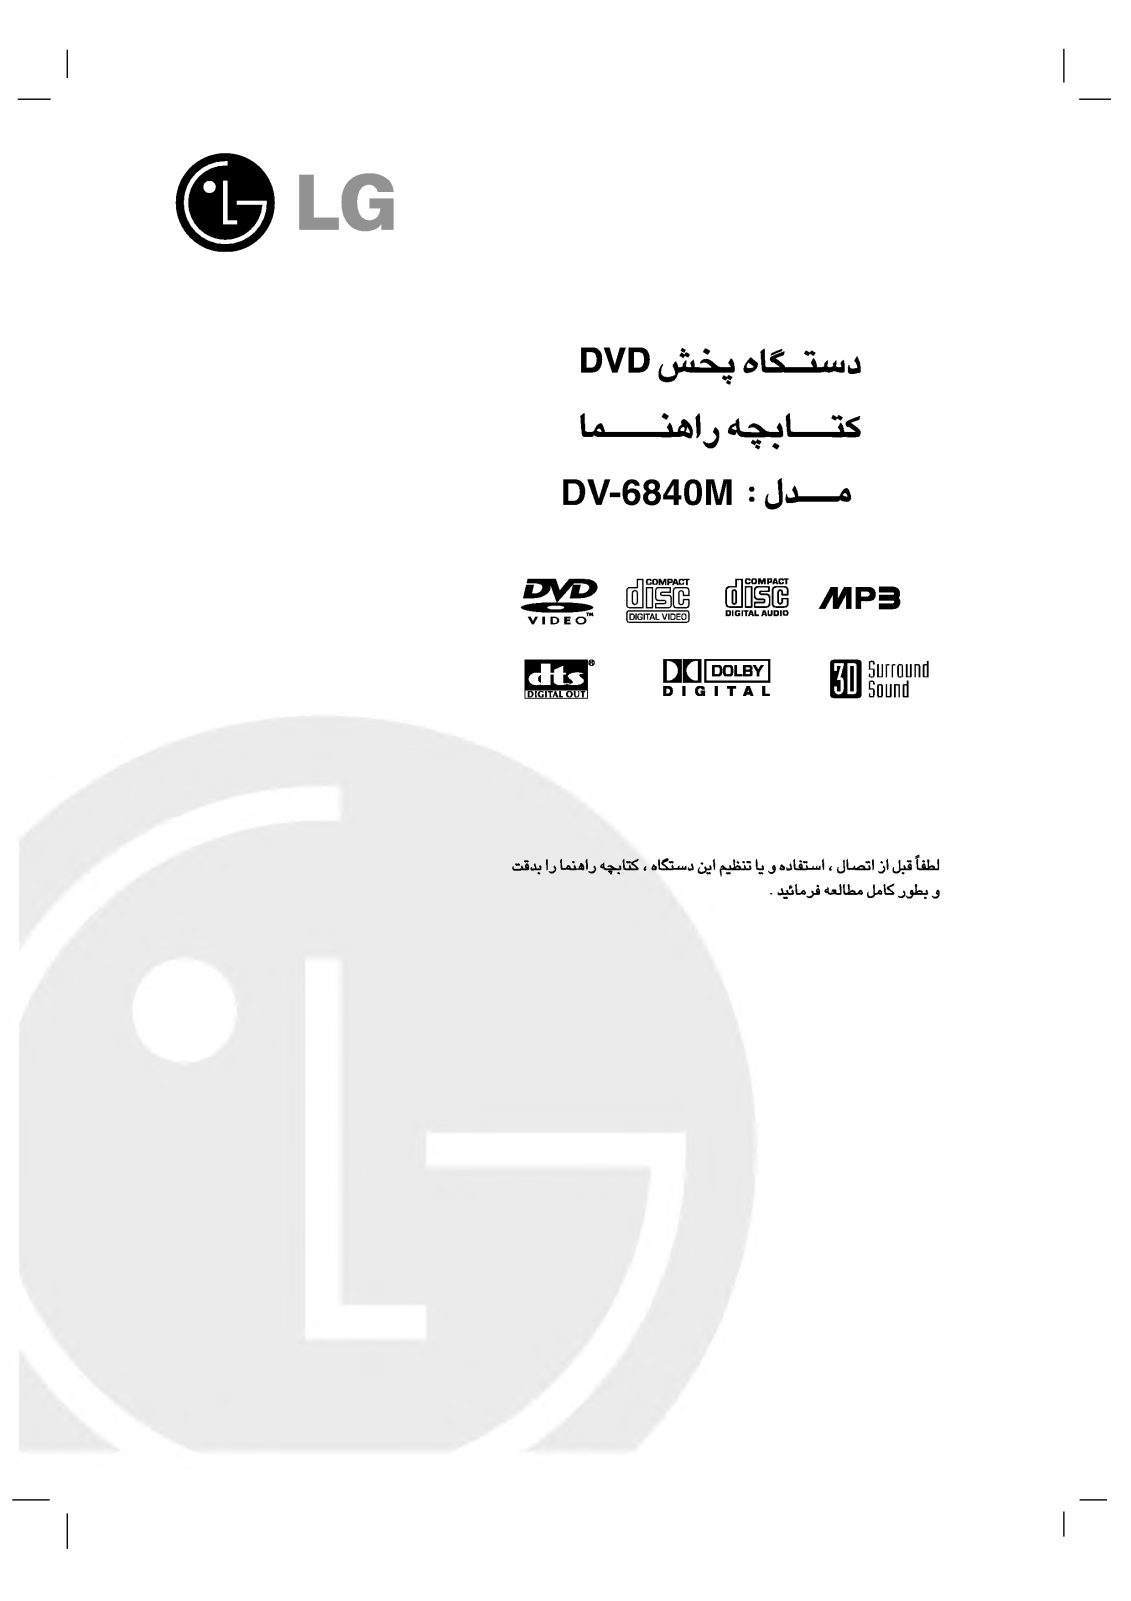 LG DV-6840M User Manual